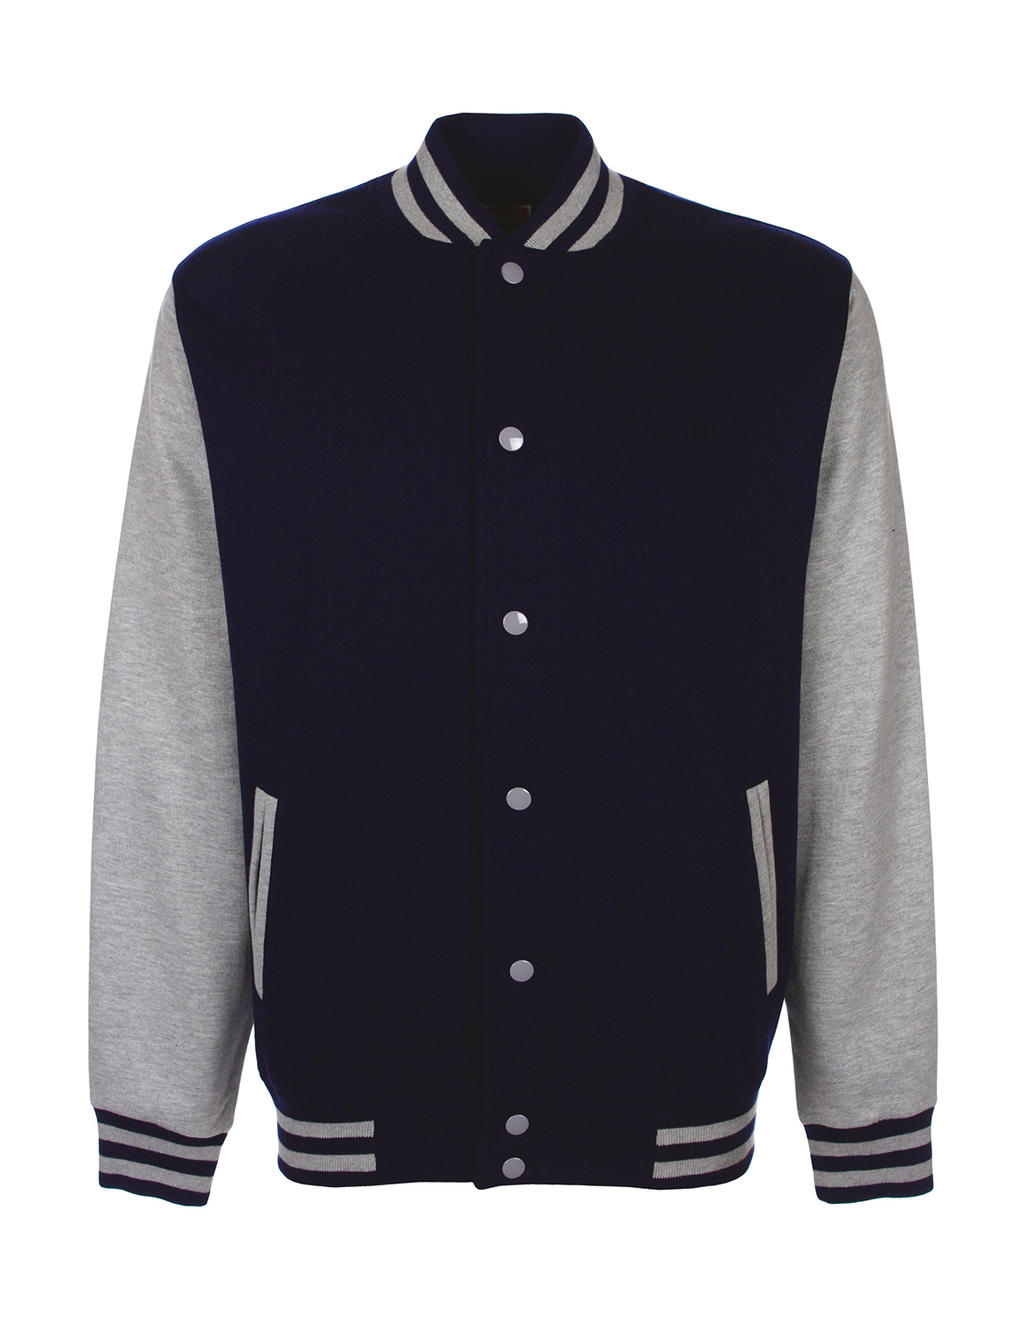  Varsity Jacket in Farbe Navy/Sport Grey